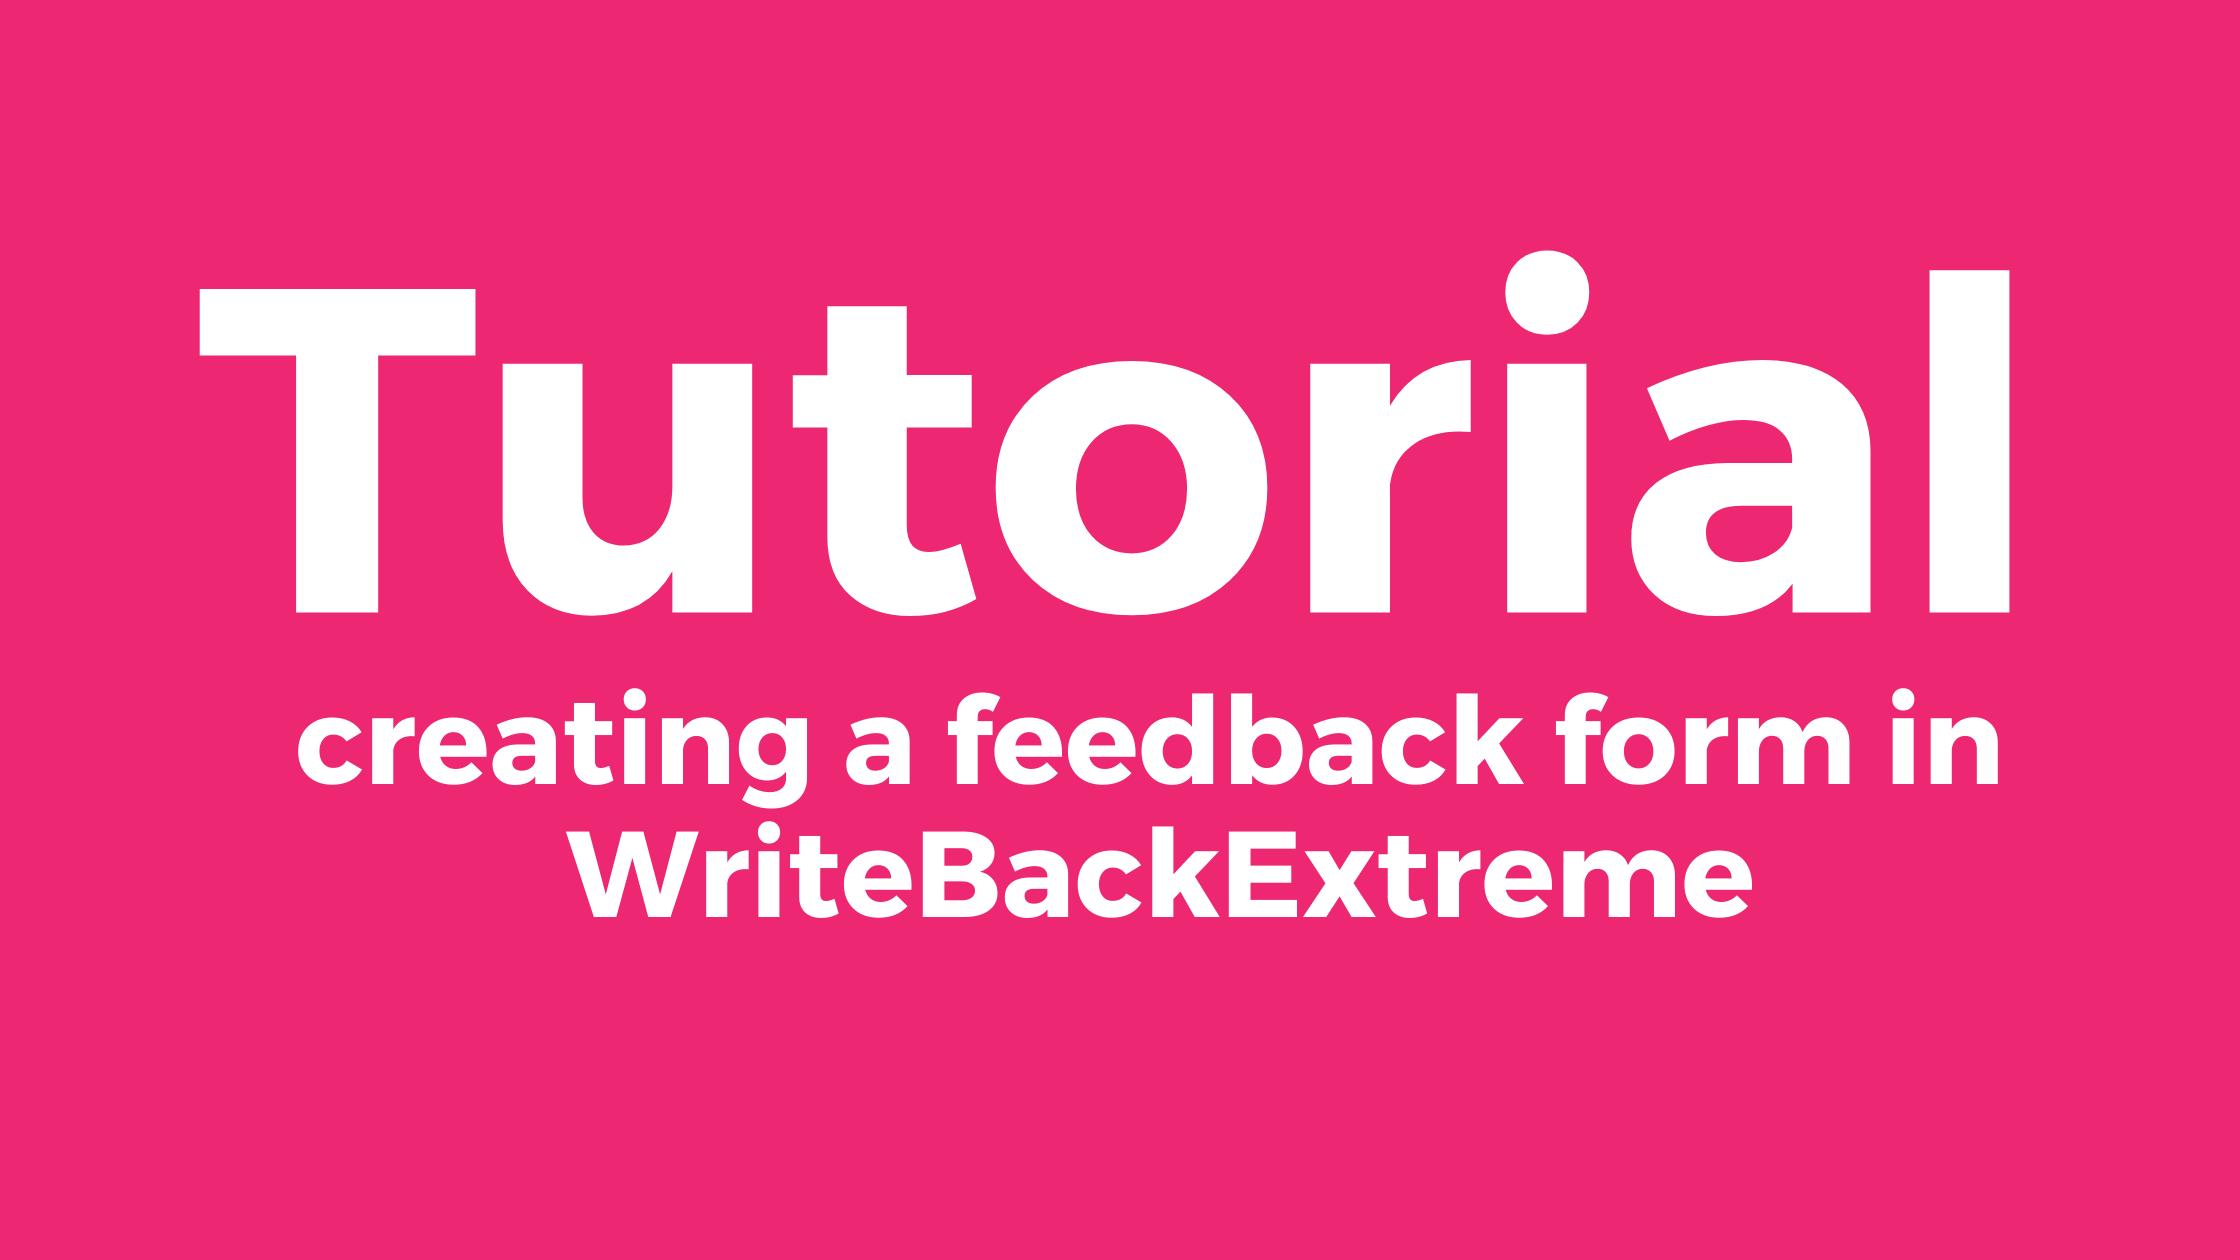 Creating a feedback form in WriteBackExtreme